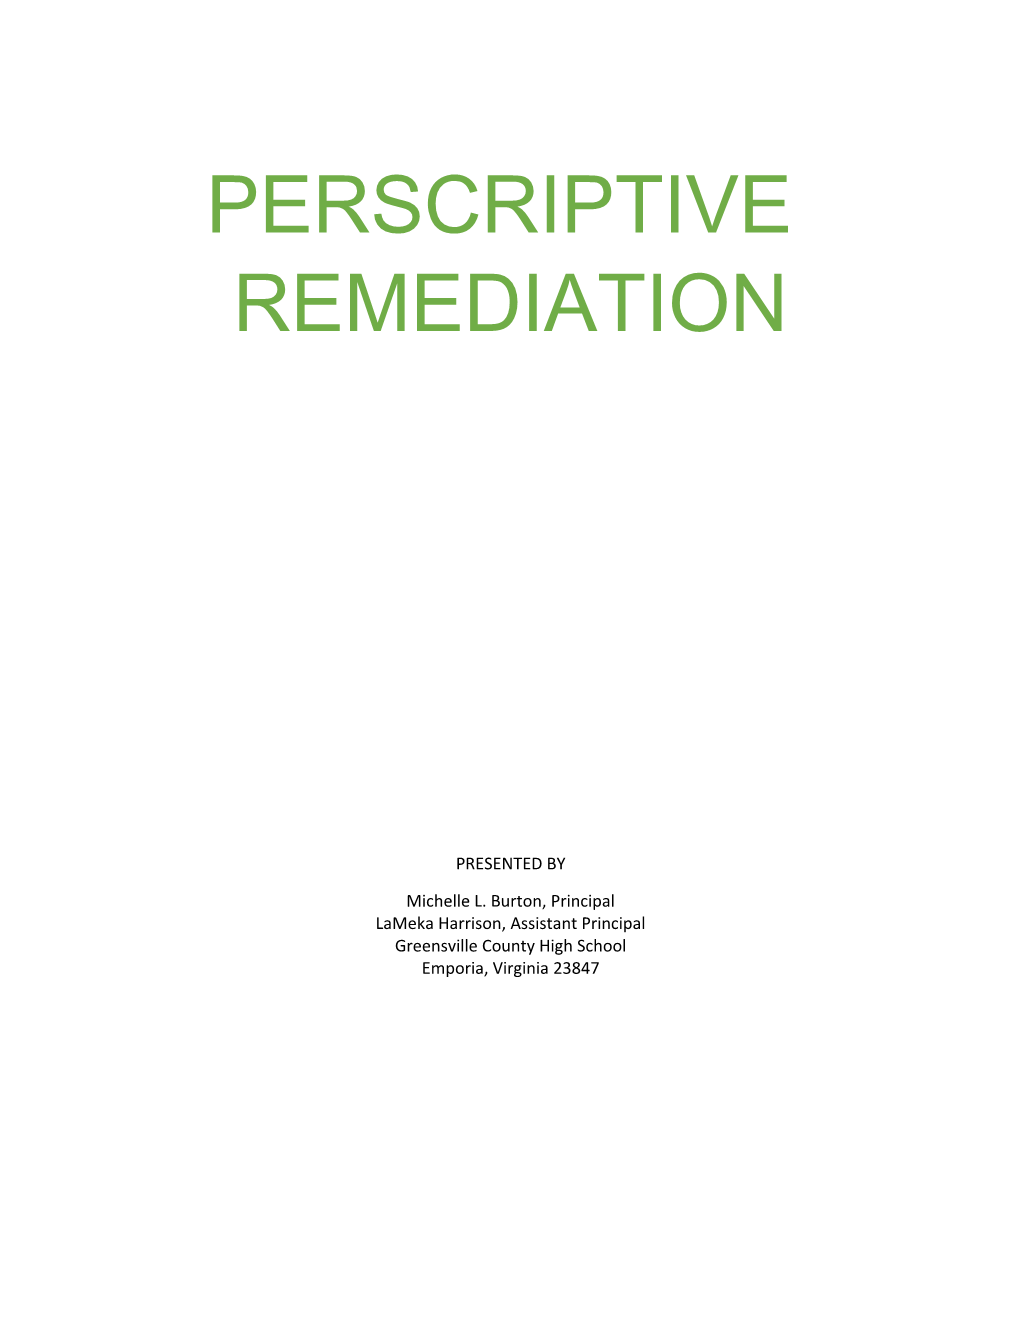 Perscriptive Remediation